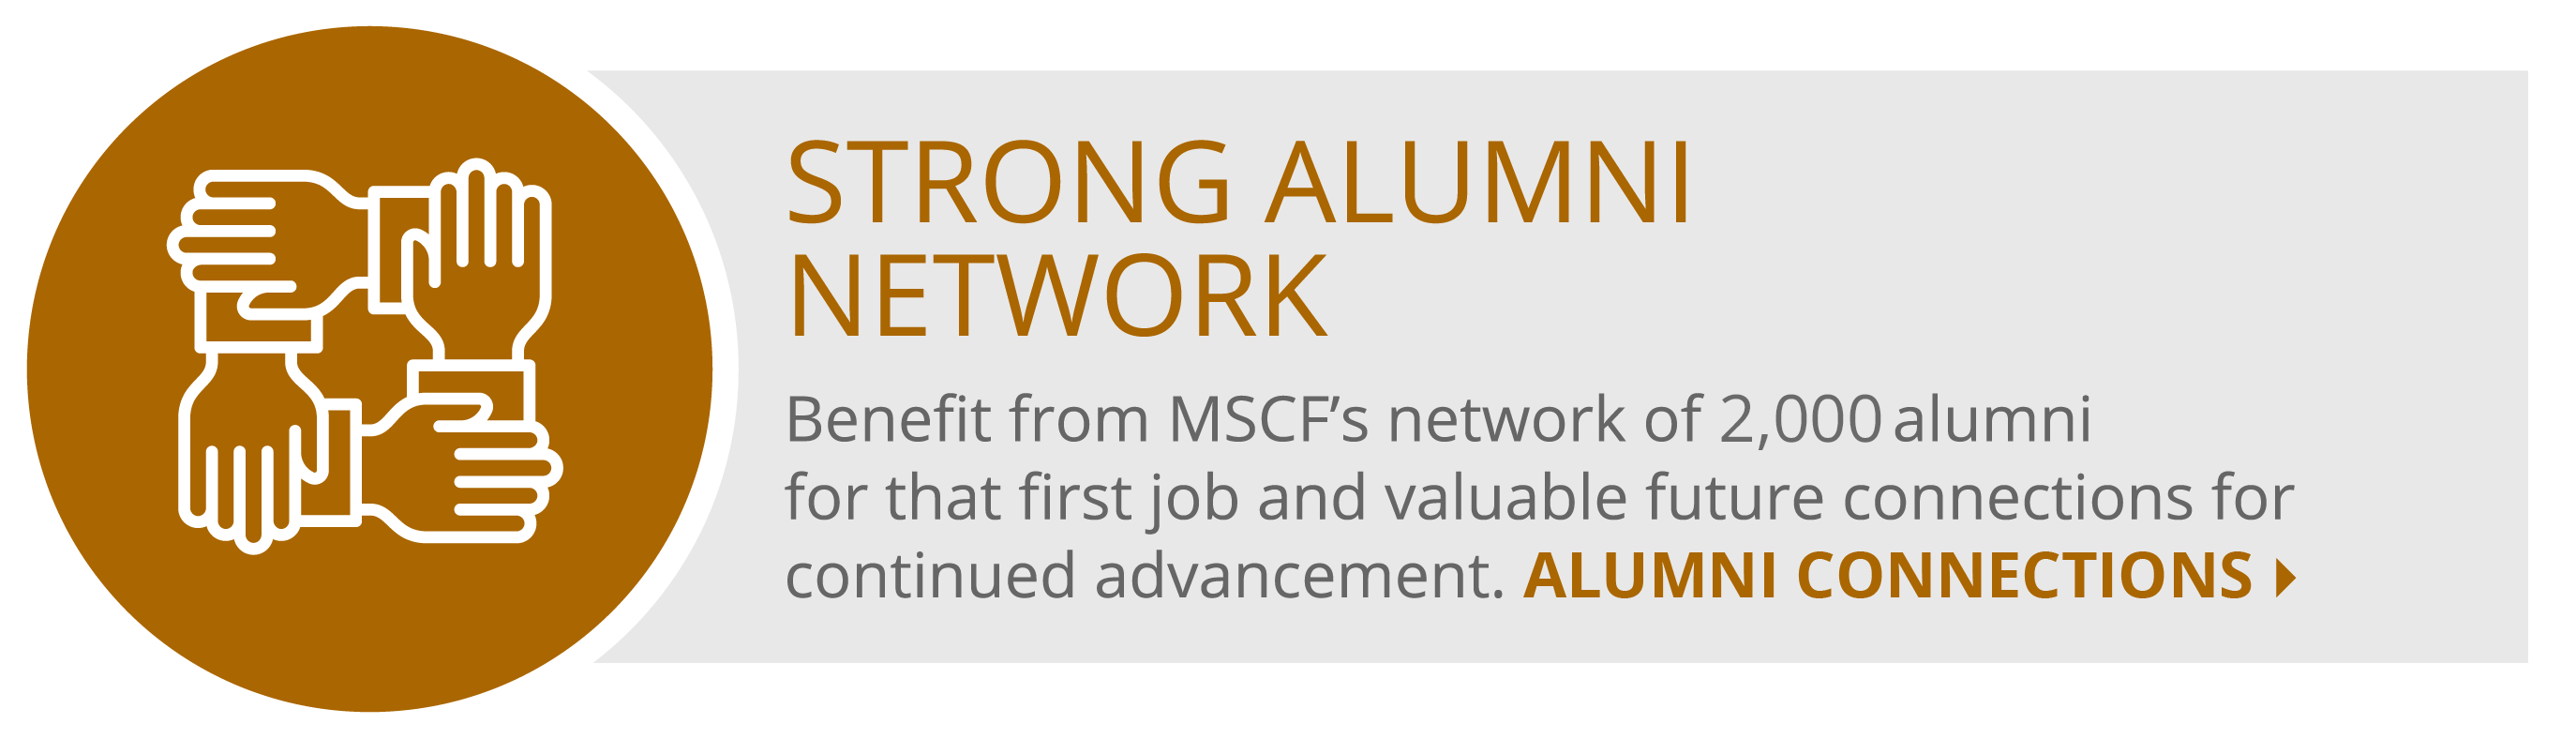 mscf_strong-alumni-network.png